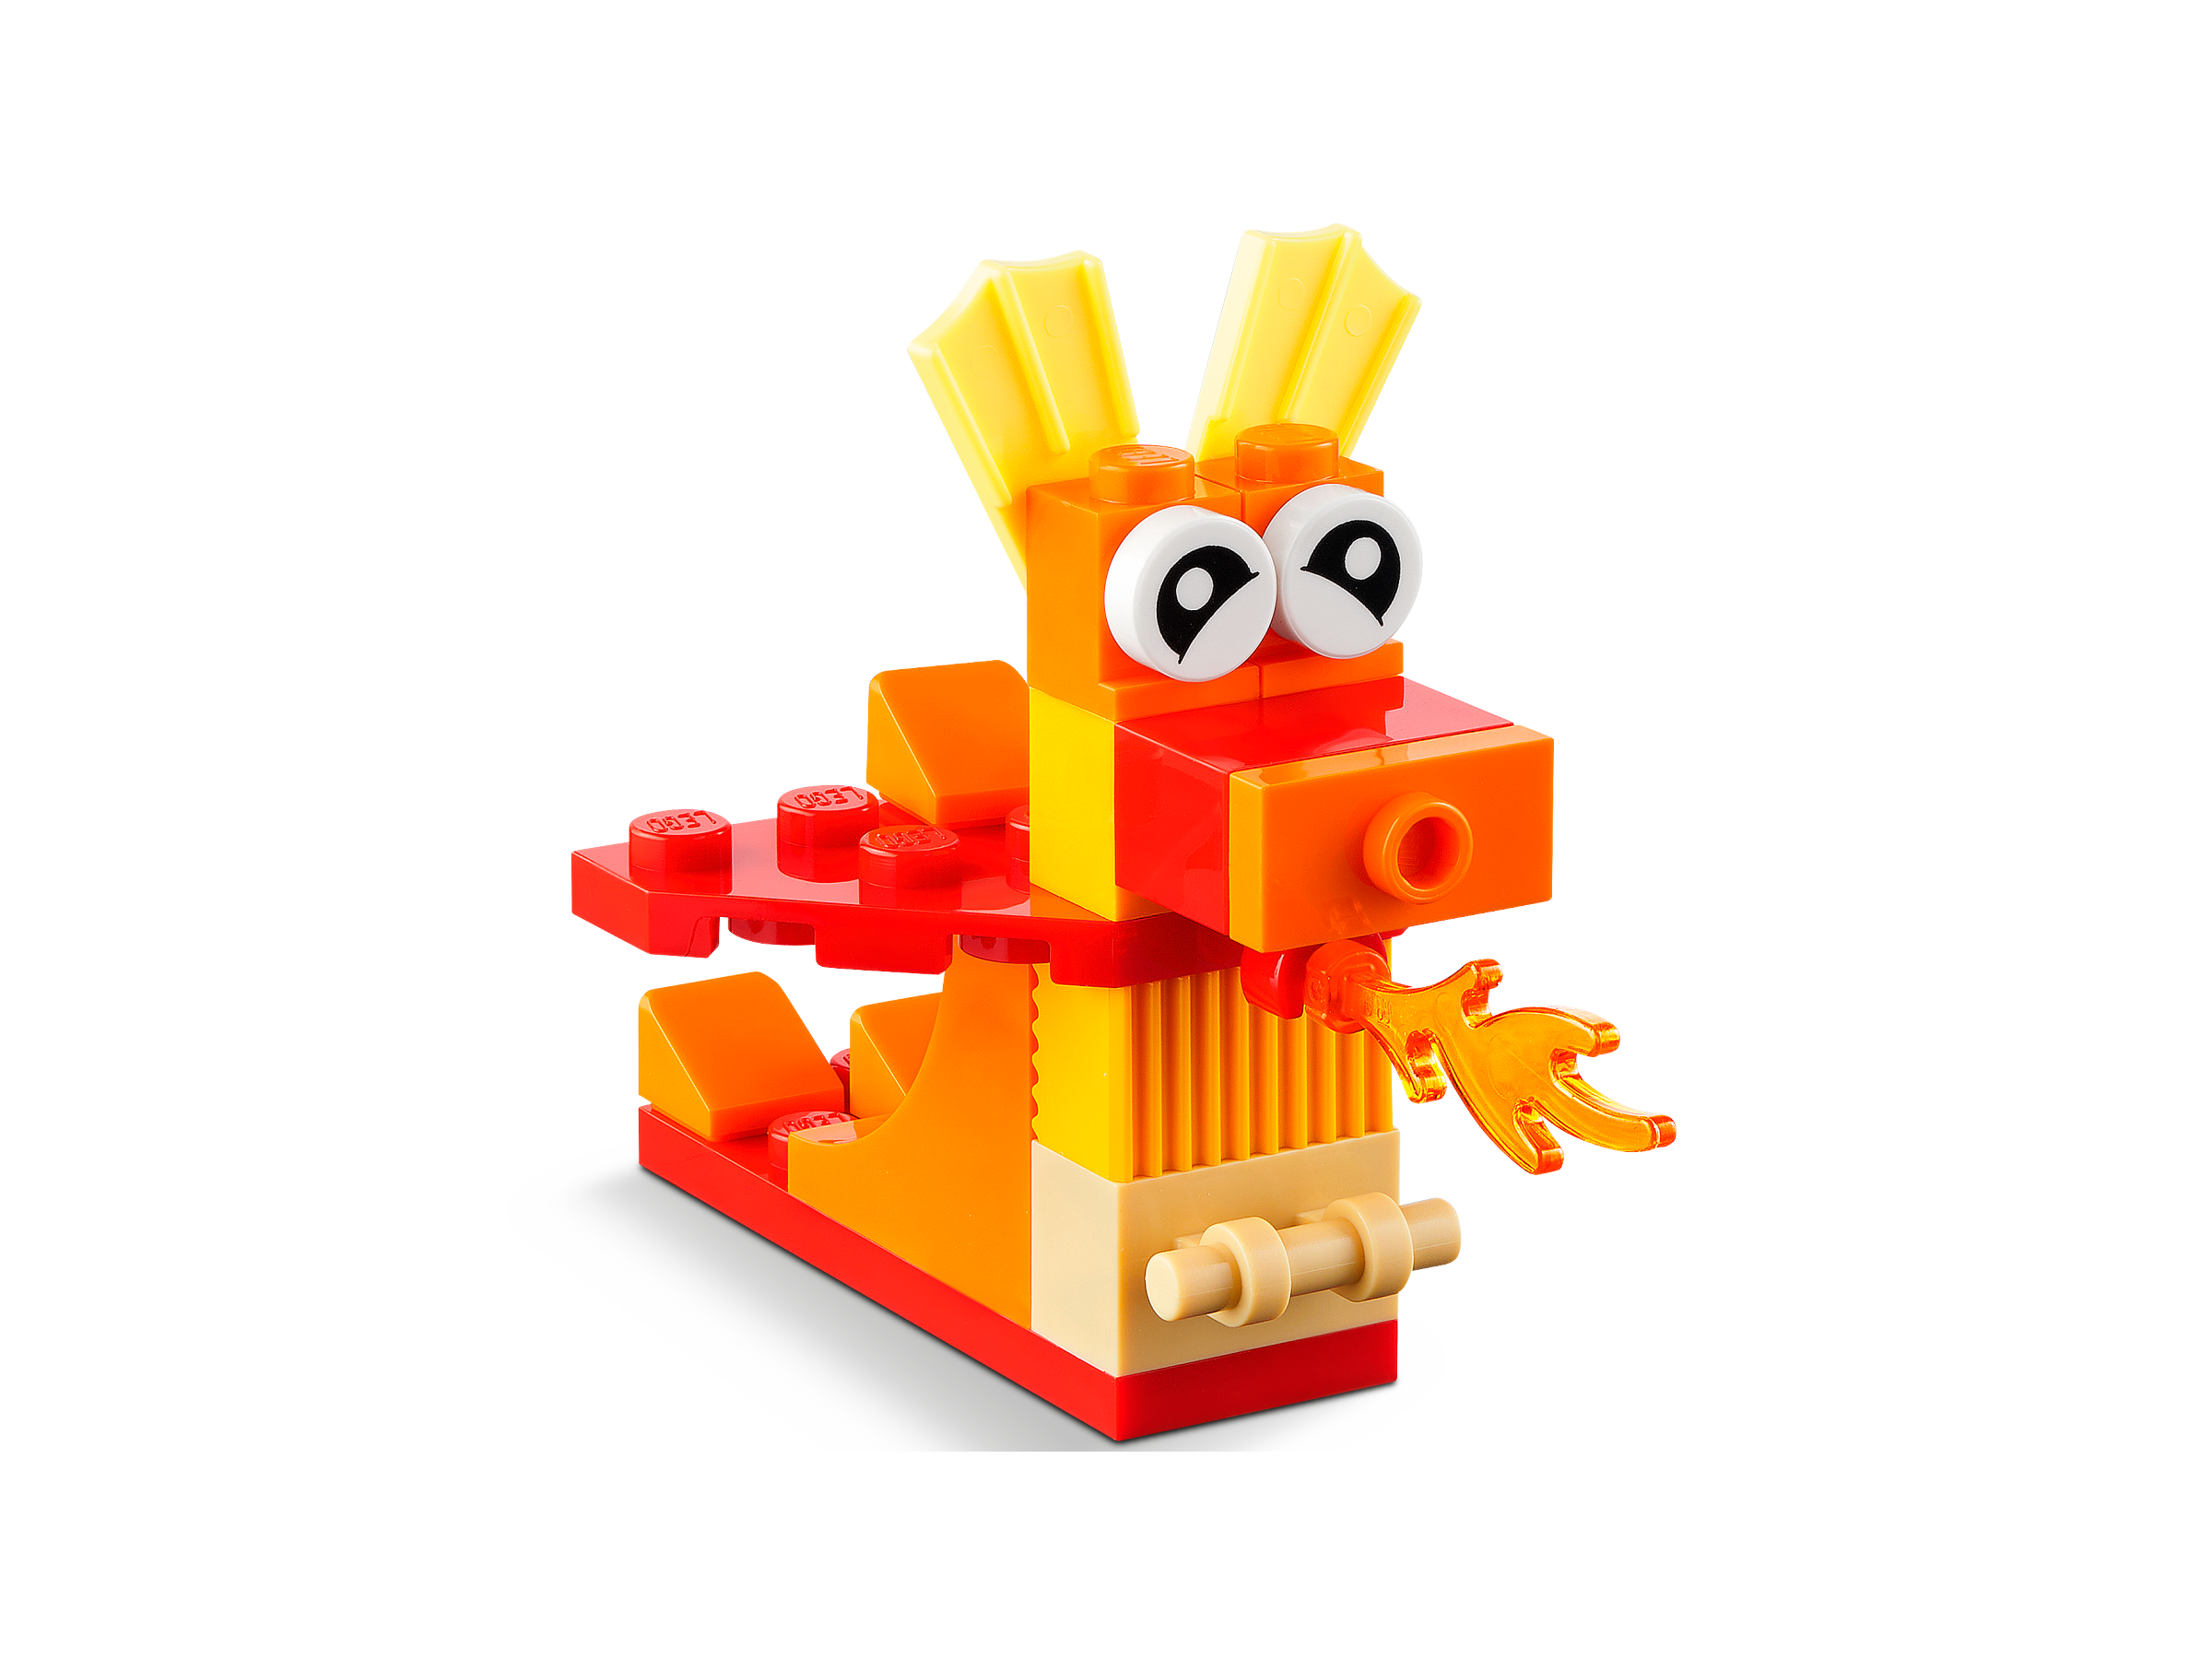 Lego / Creative Monsters